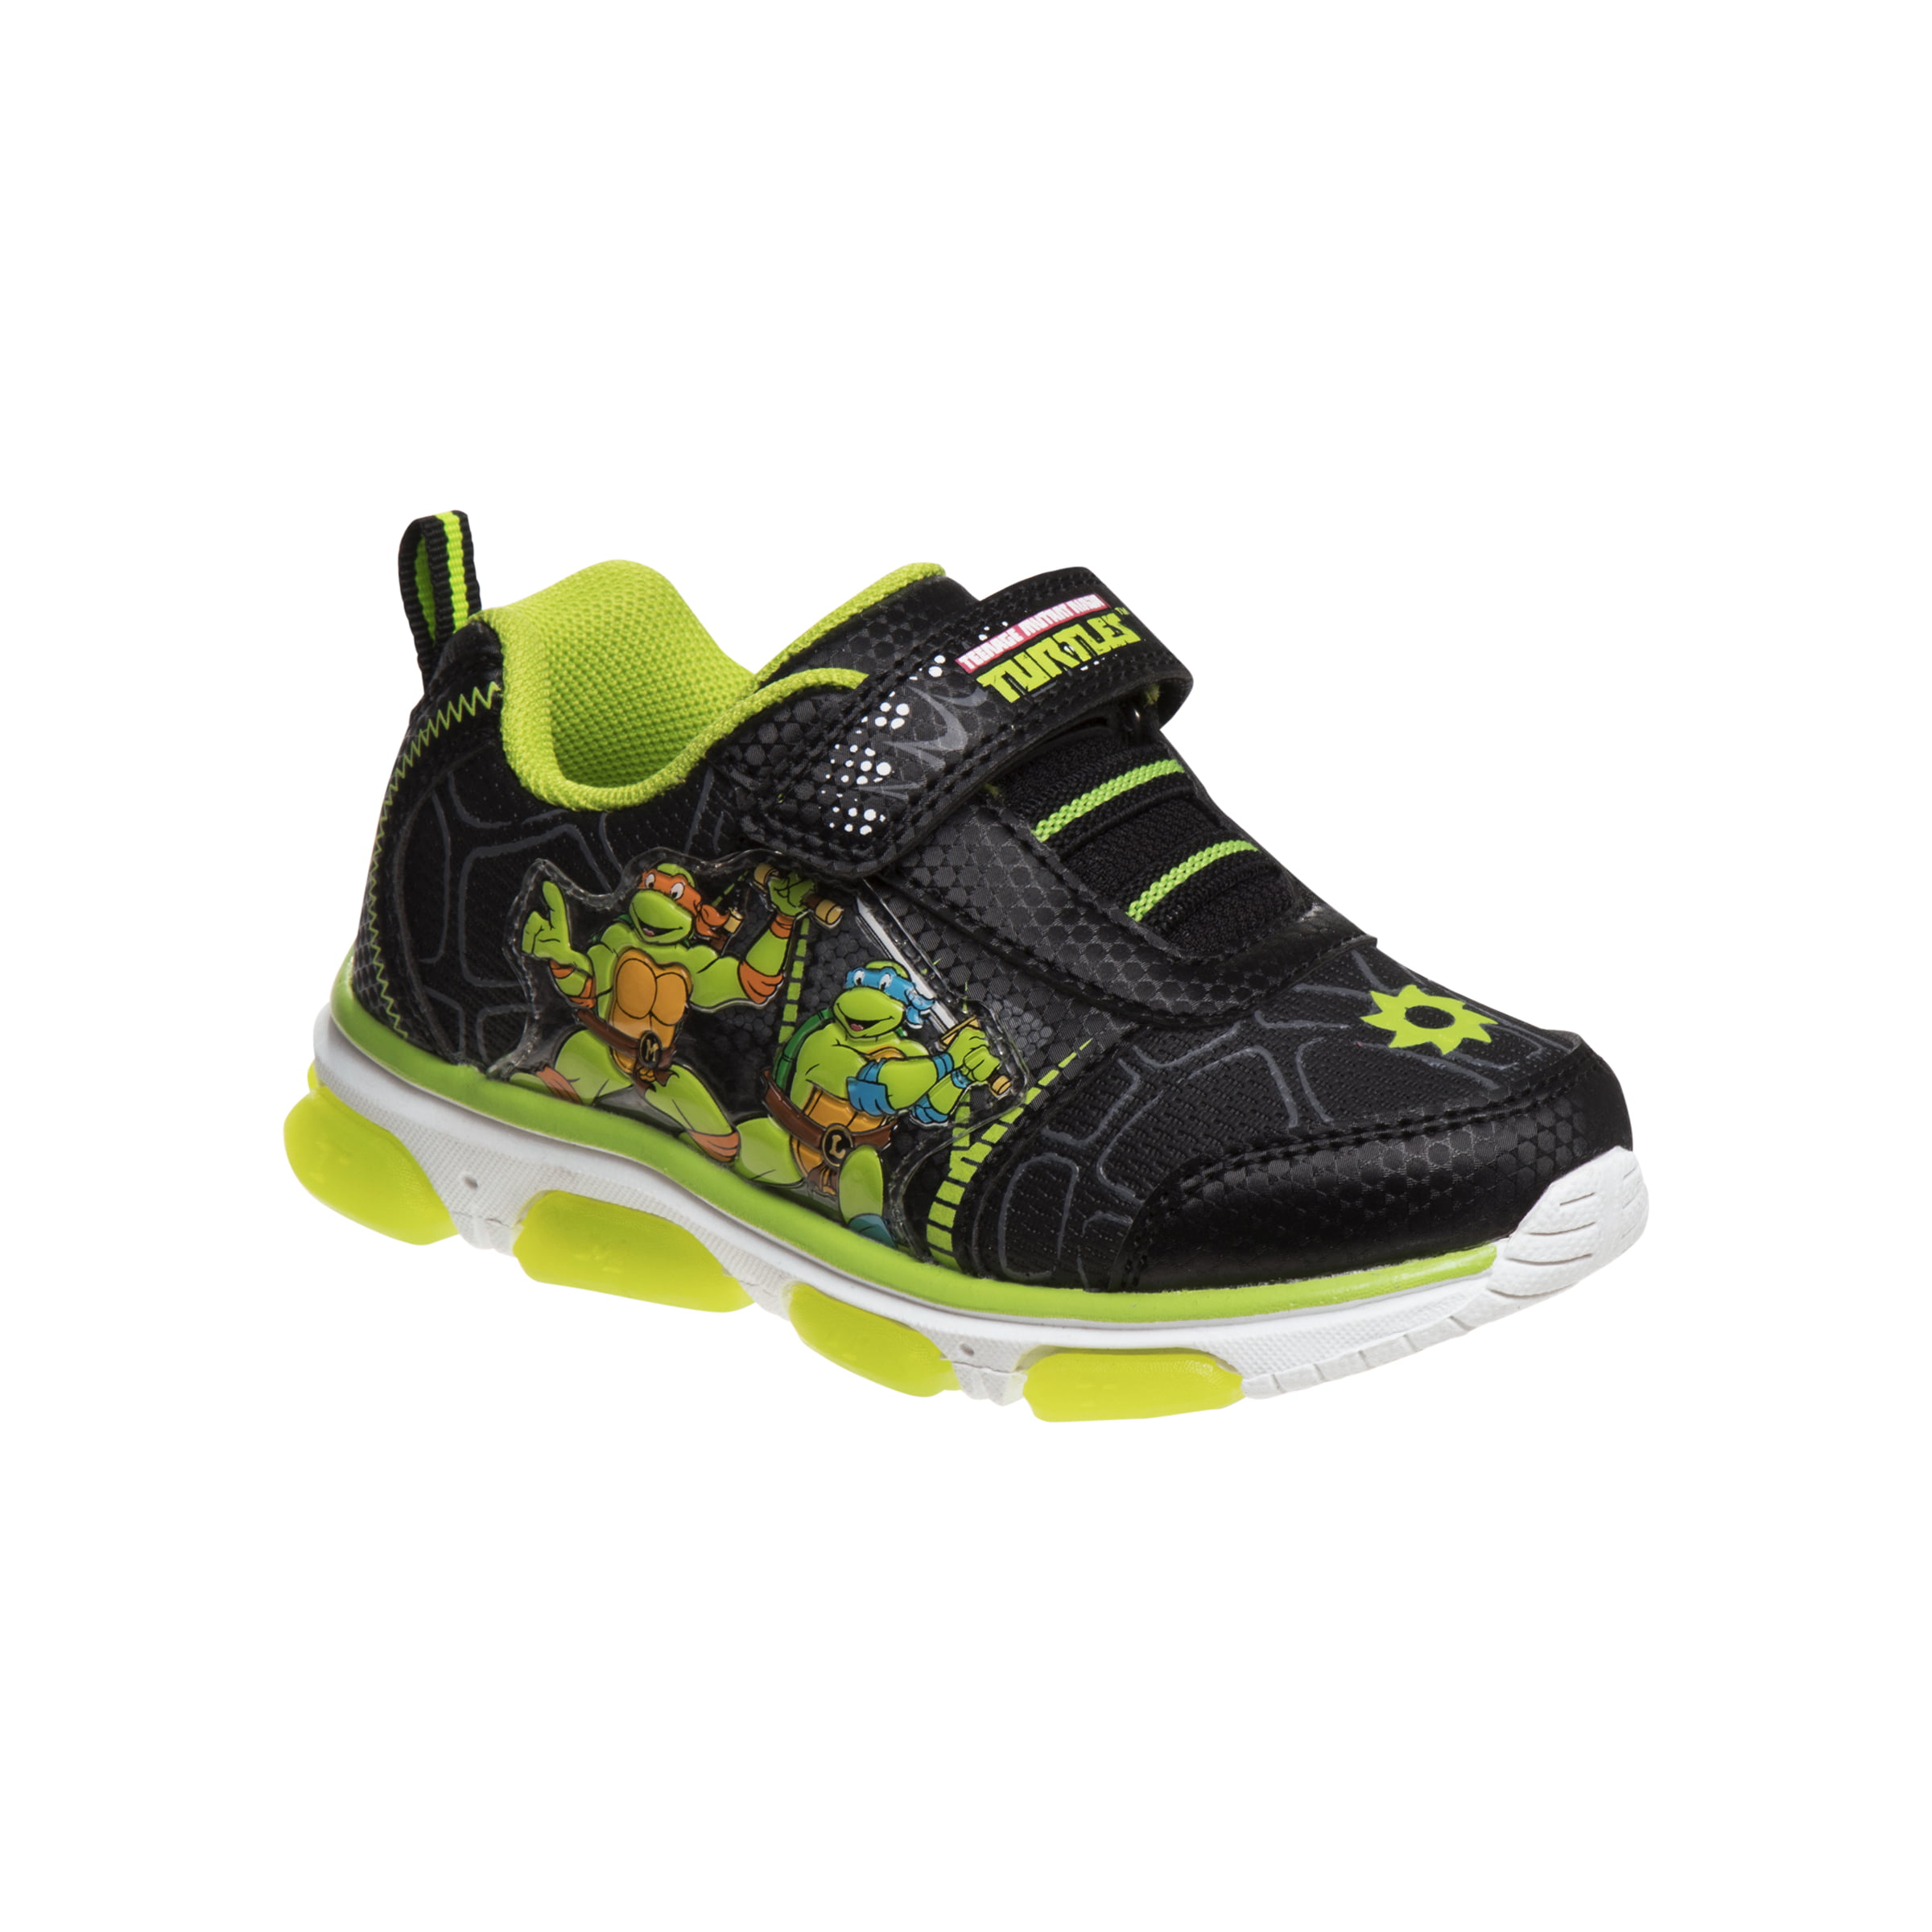 MUTANT NINJA TURTLES Nickelodeon Light-Up Shoes Sneakers Toddler's Size 8  $40 